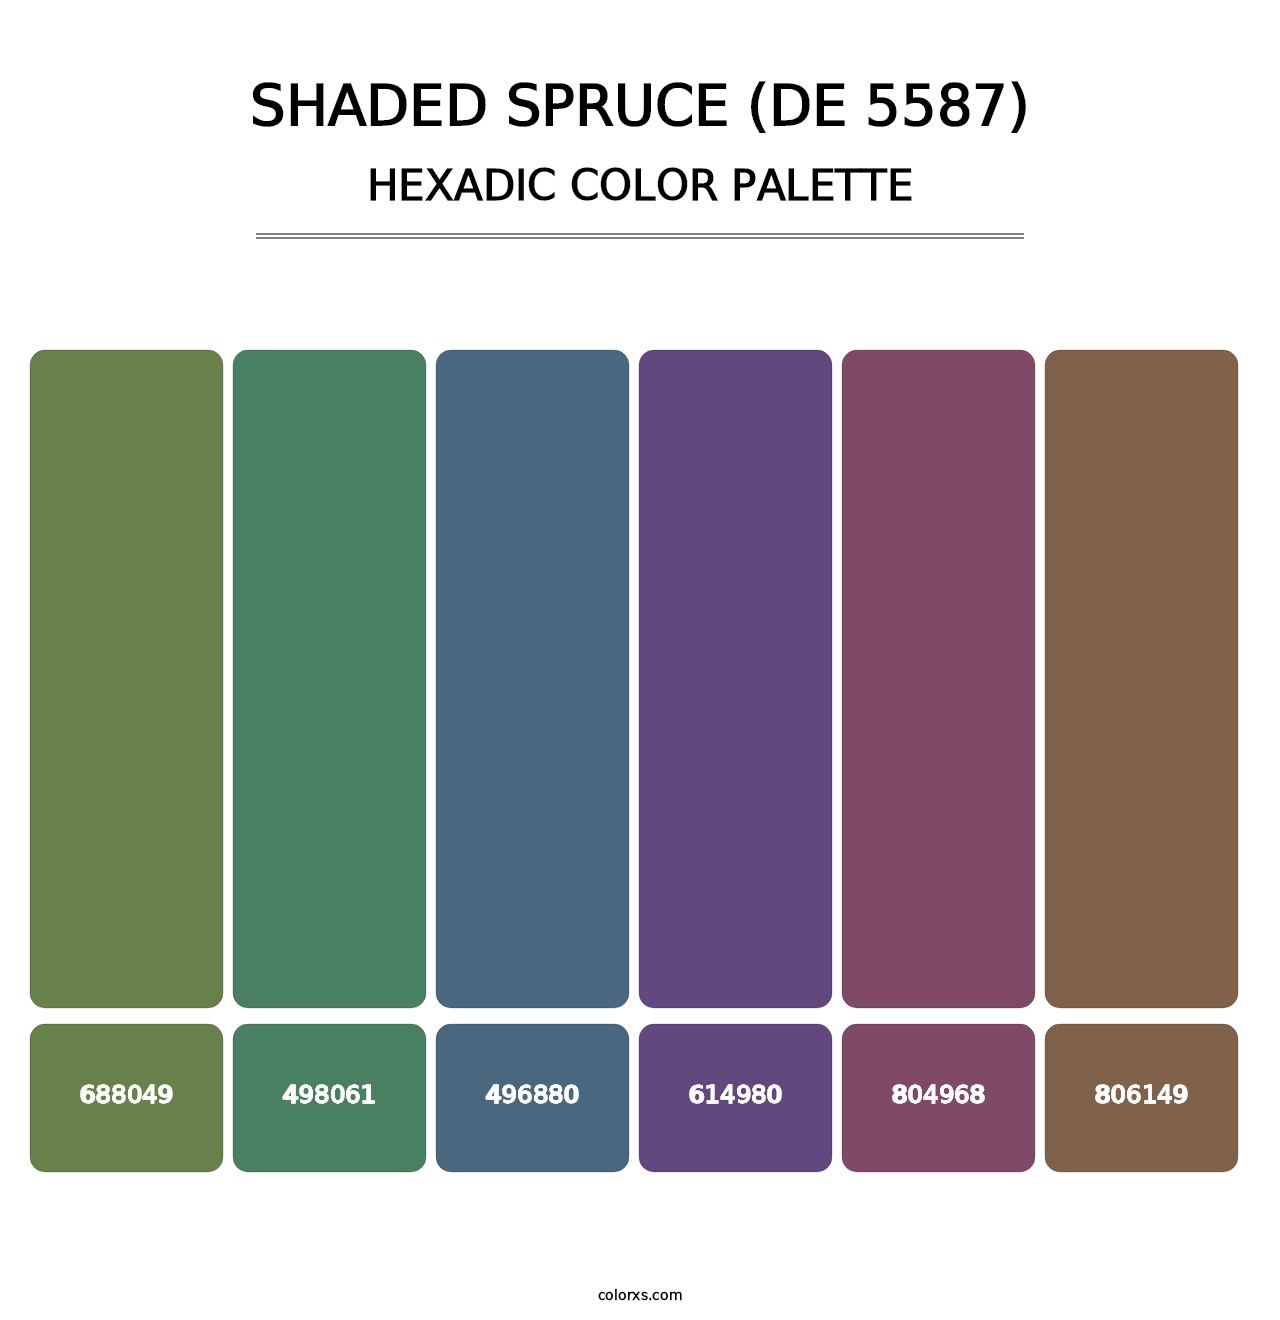 Shaded Spruce (DE 5587) - Hexadic Color Palette